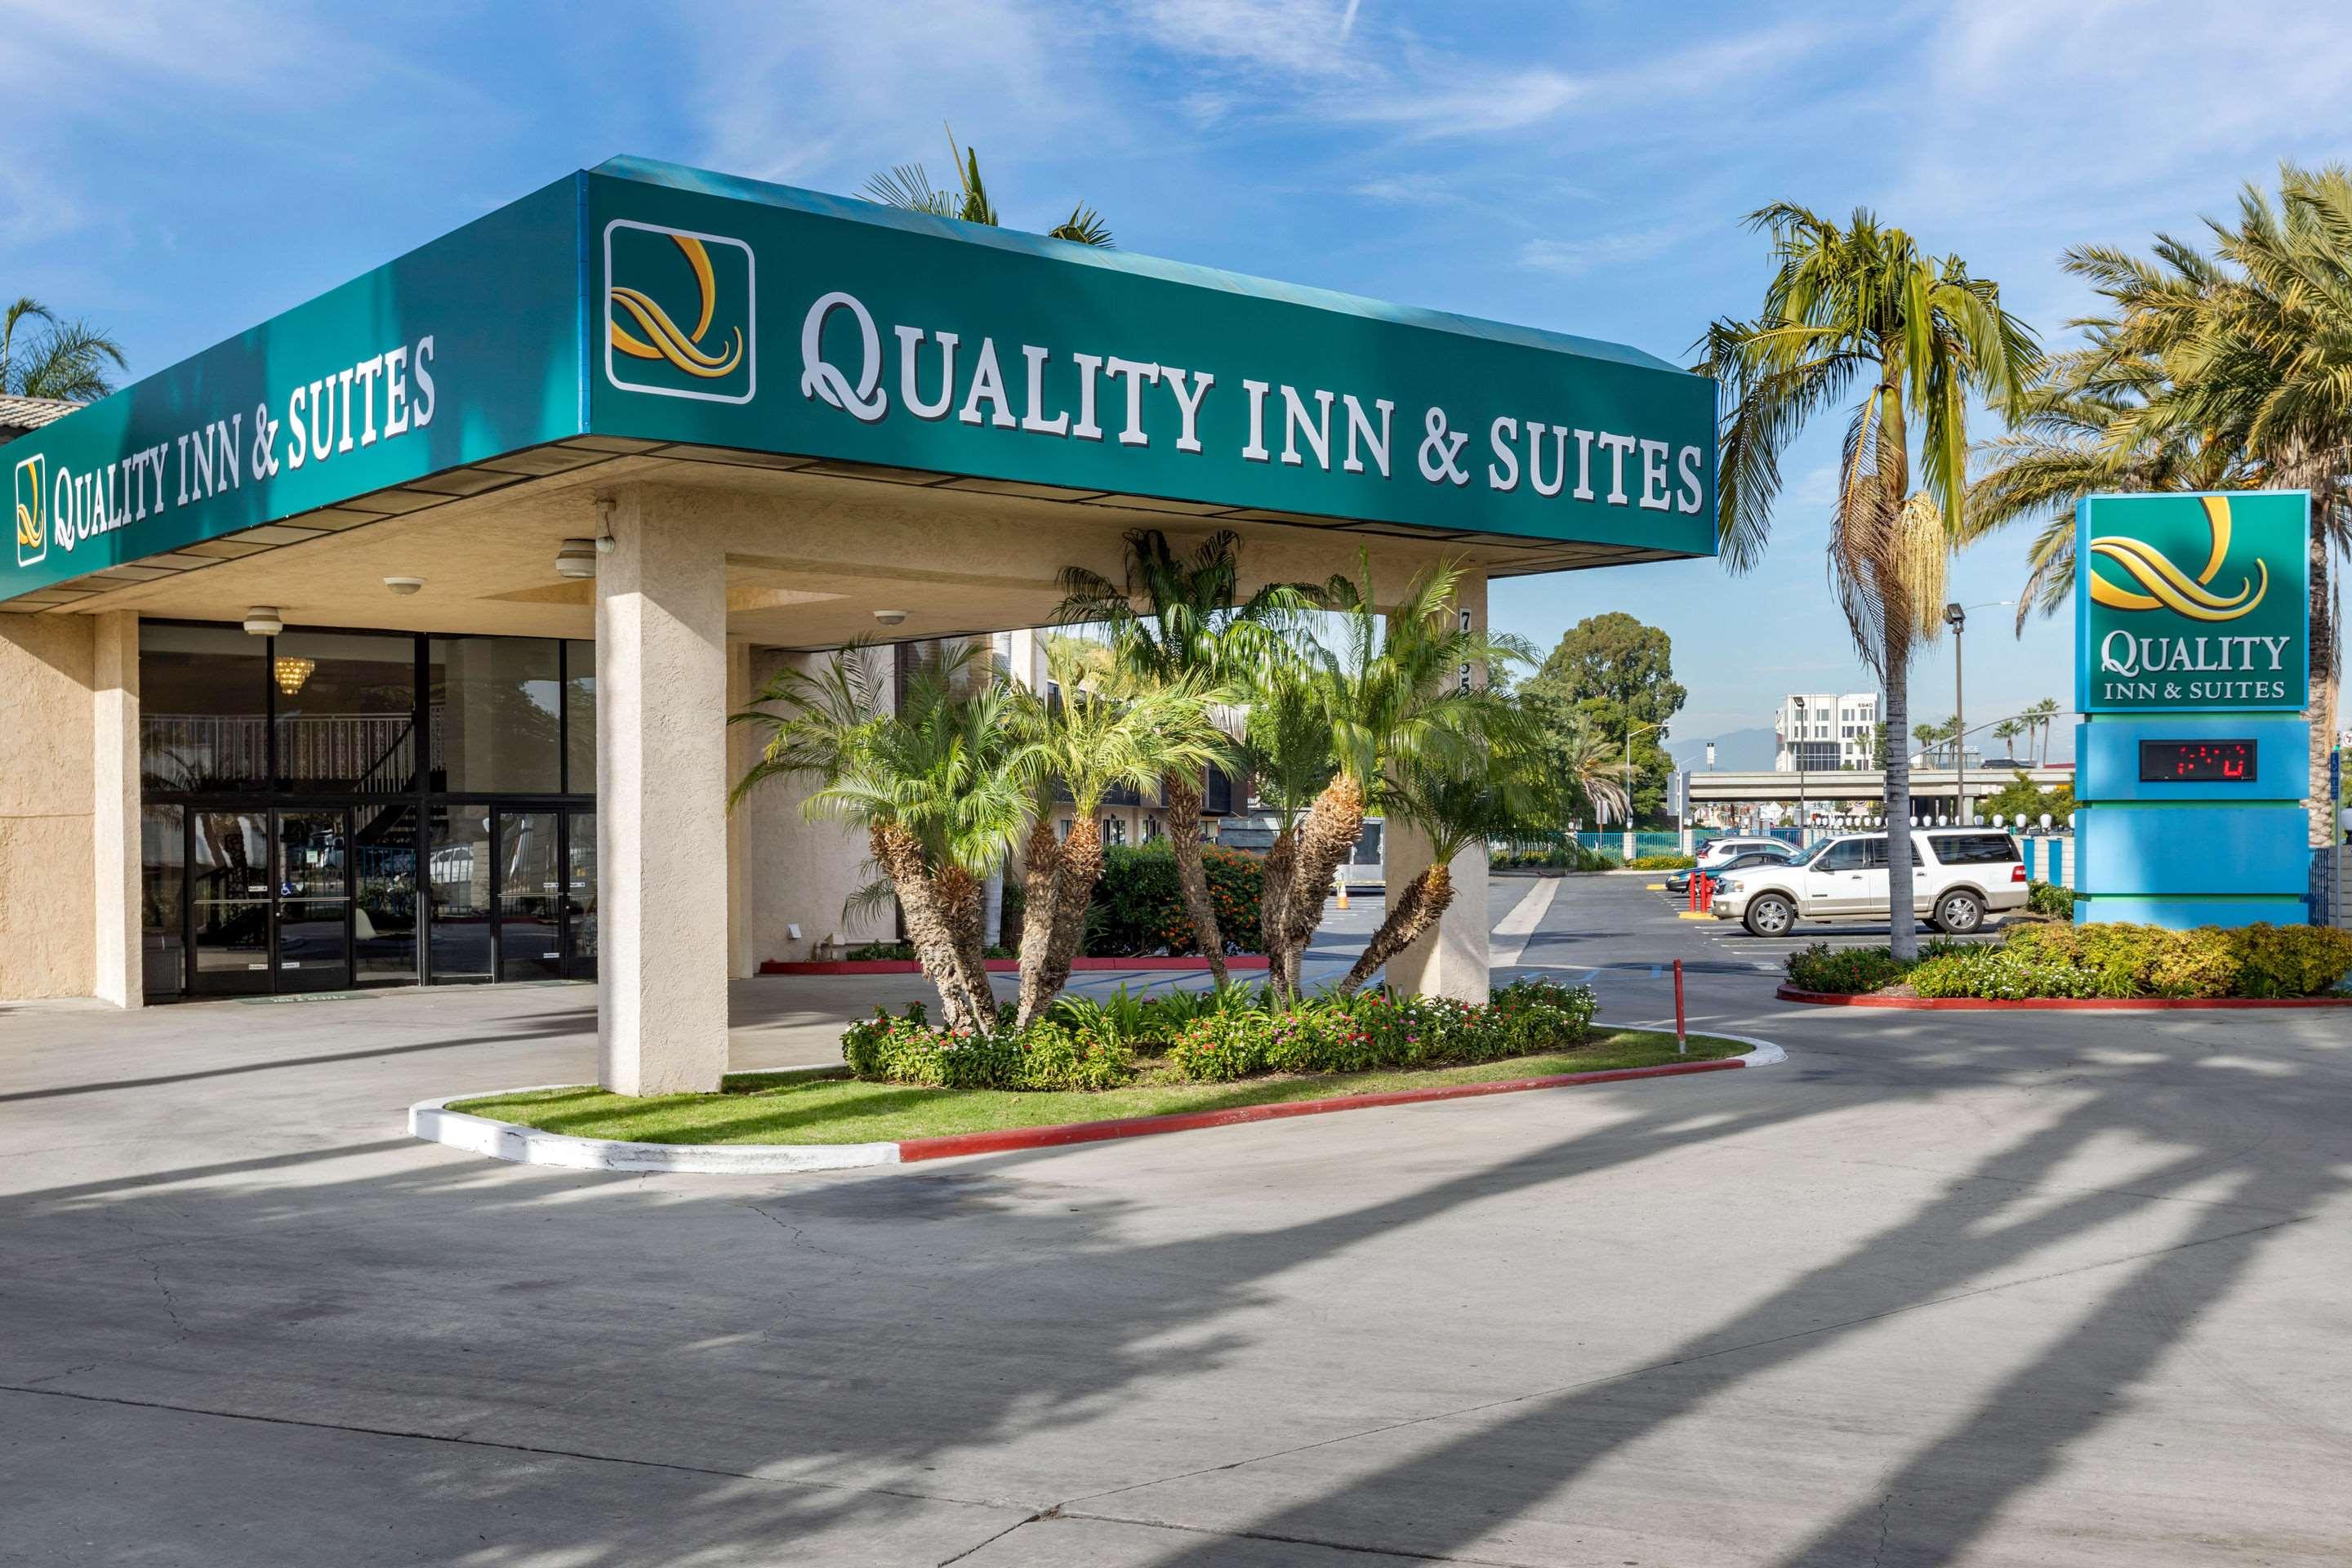 Quality Inn & Suites Buena Park Anaheim